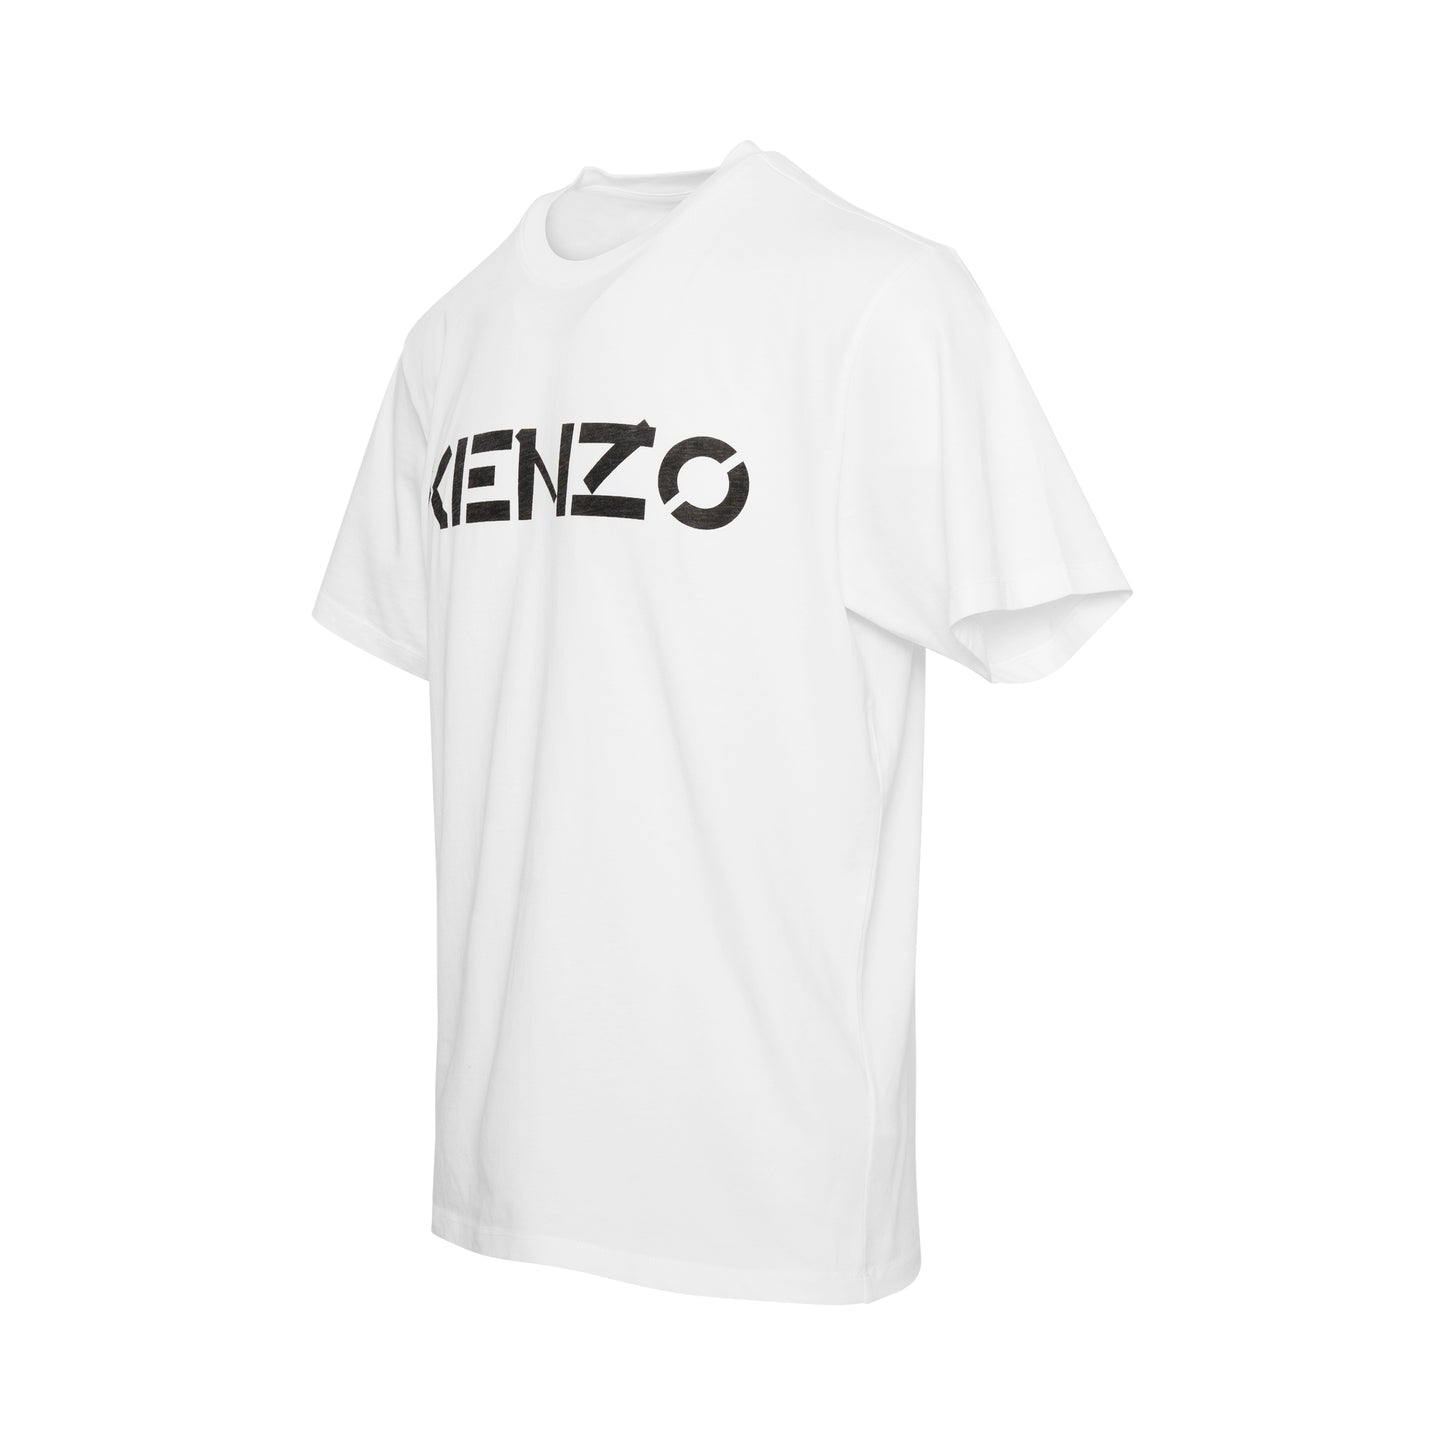 Kenzo Classic Logo T-Shirt in White